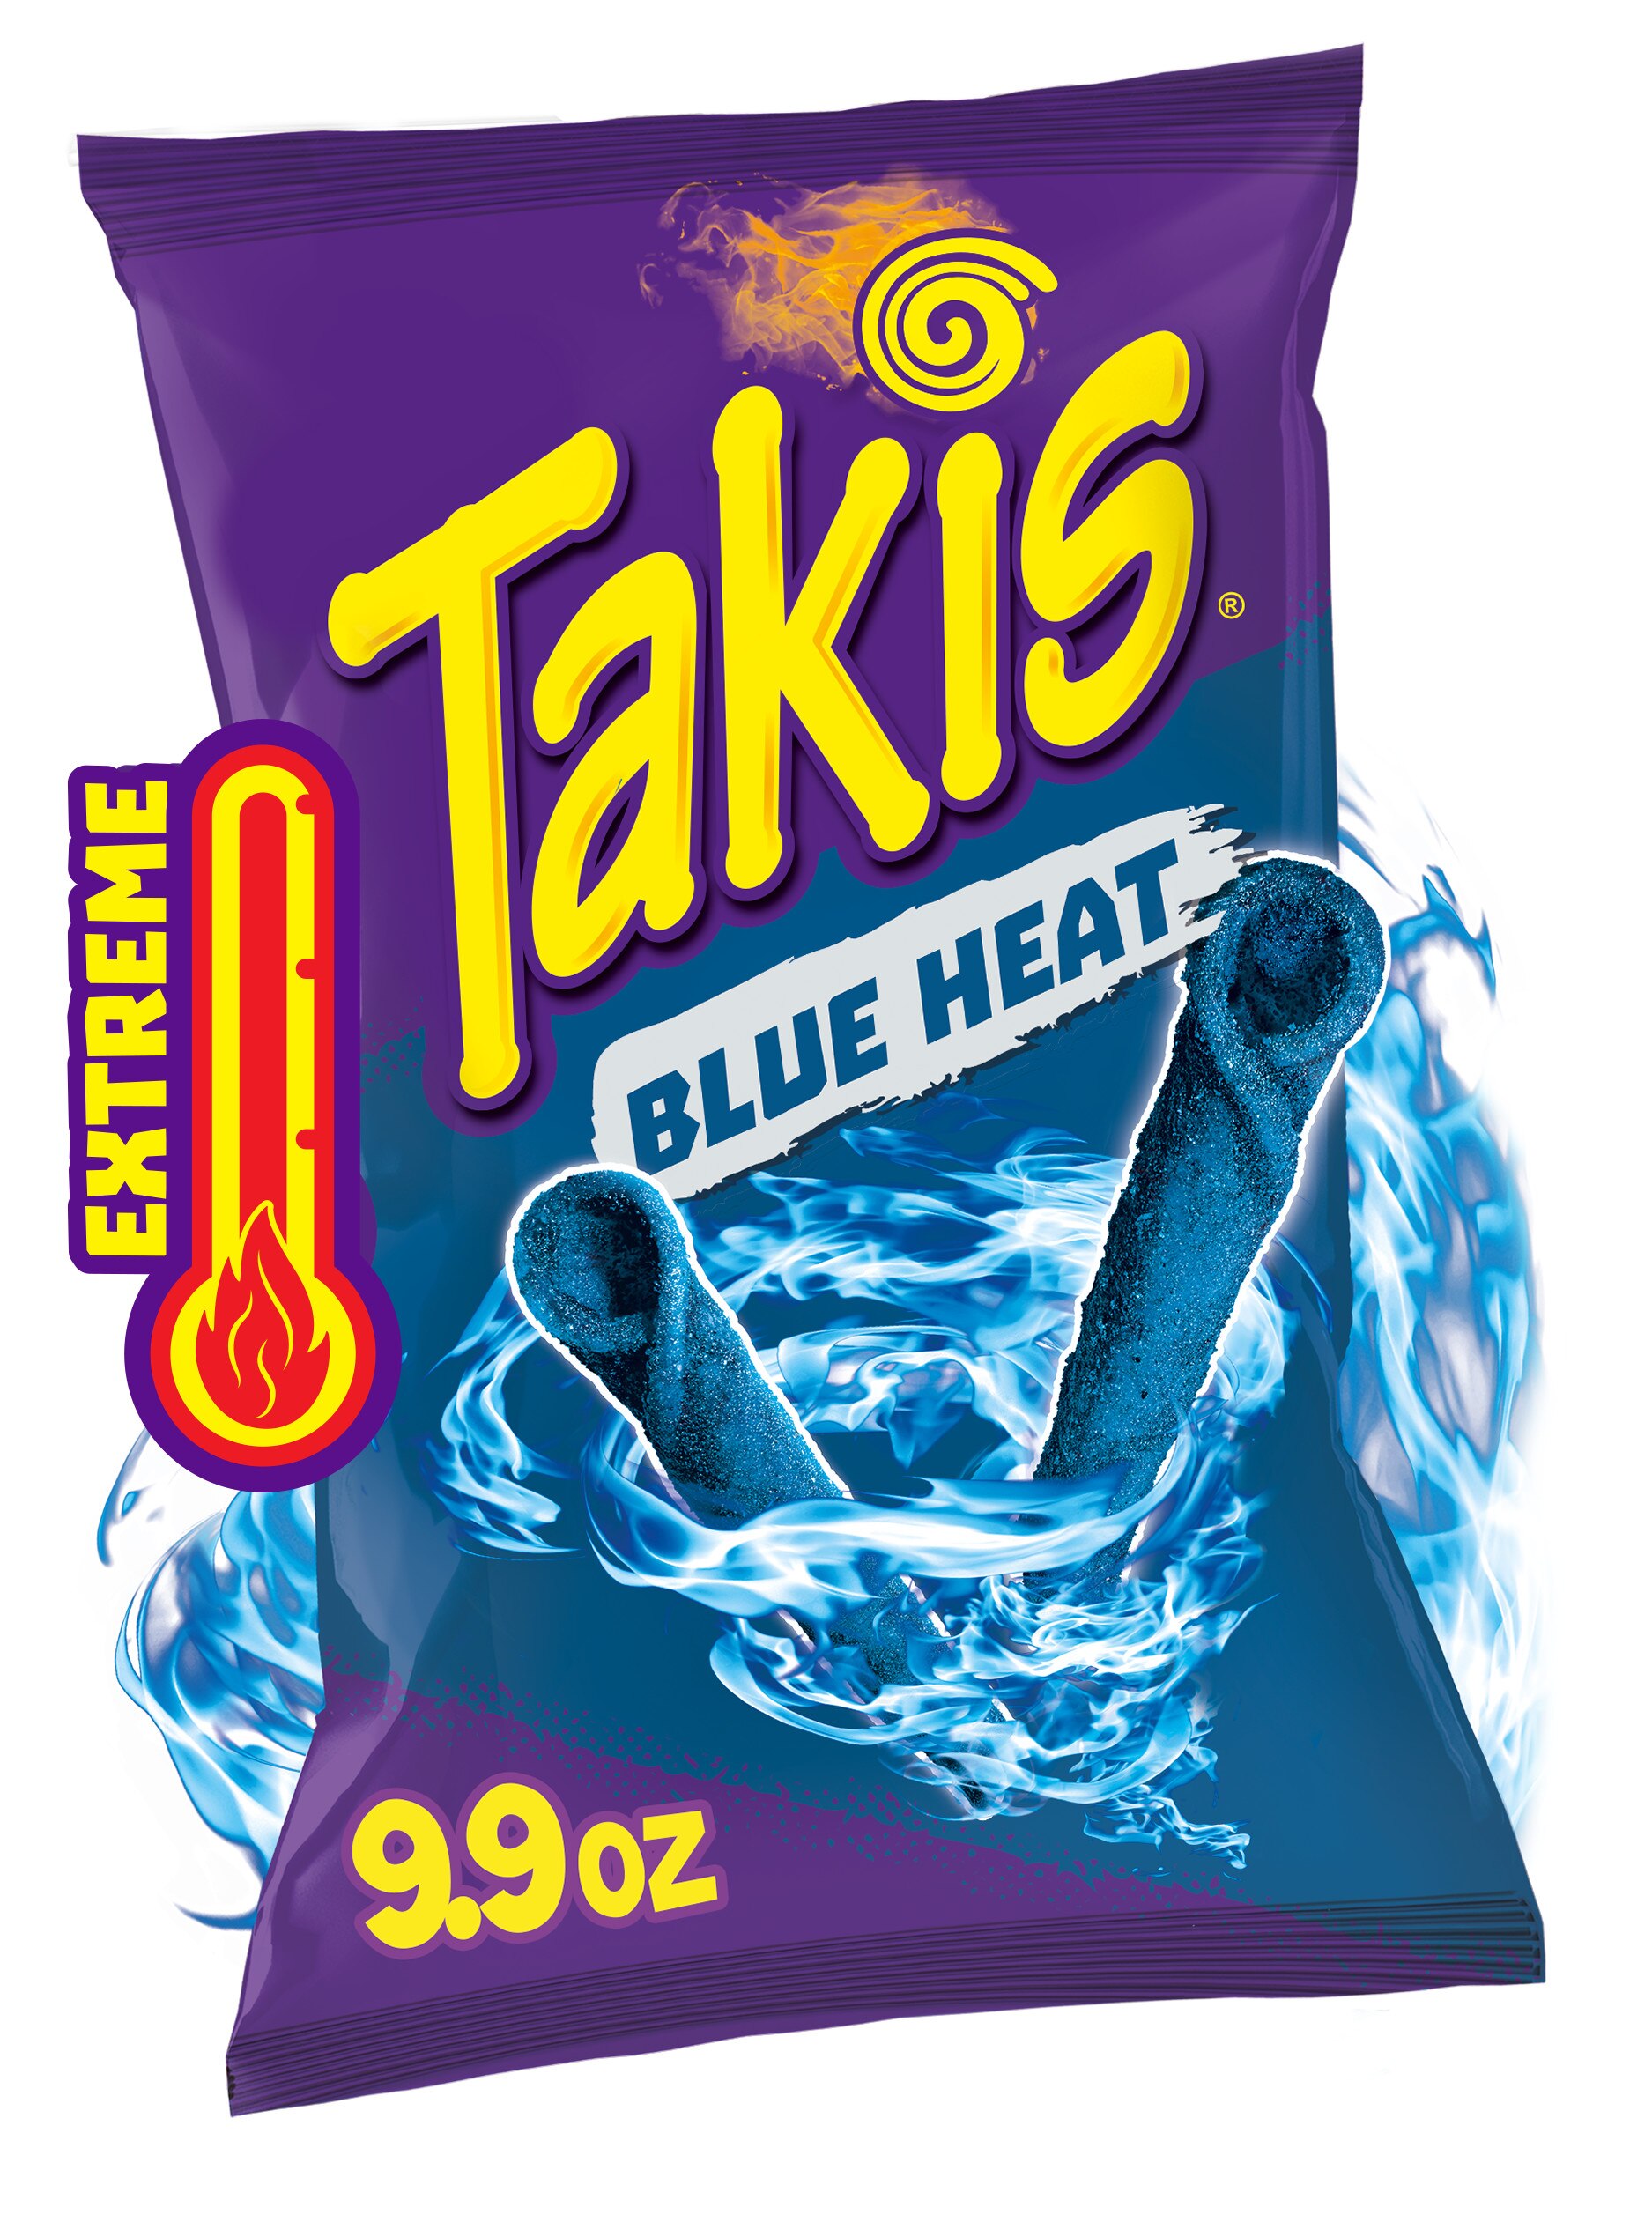 Takis Blue Heat Rolls Hot Chili Pepper Flavored Spicy Tortilla Chips, 9.9 Oz , CVS